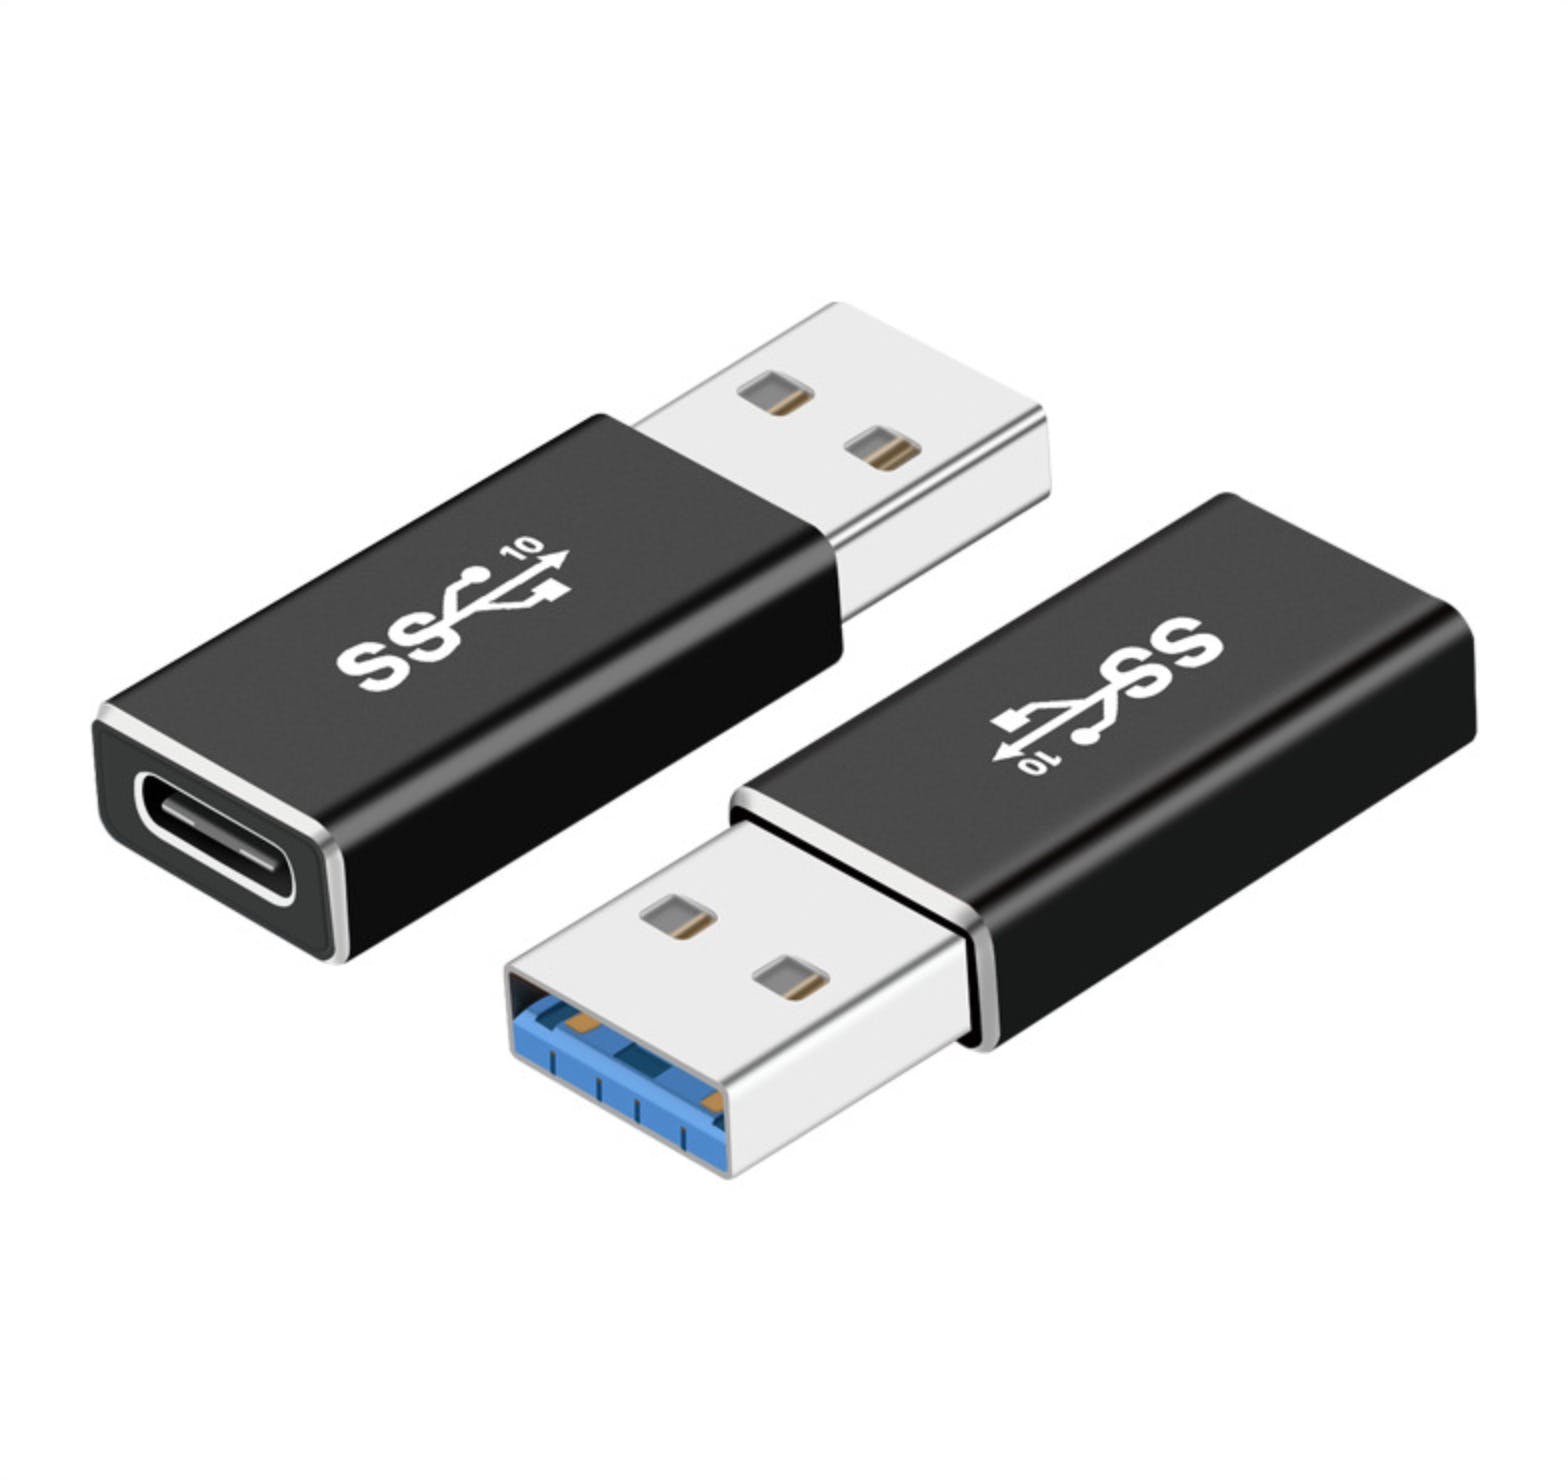 USB-A to USB-C Mini Adapter - HALO BACK